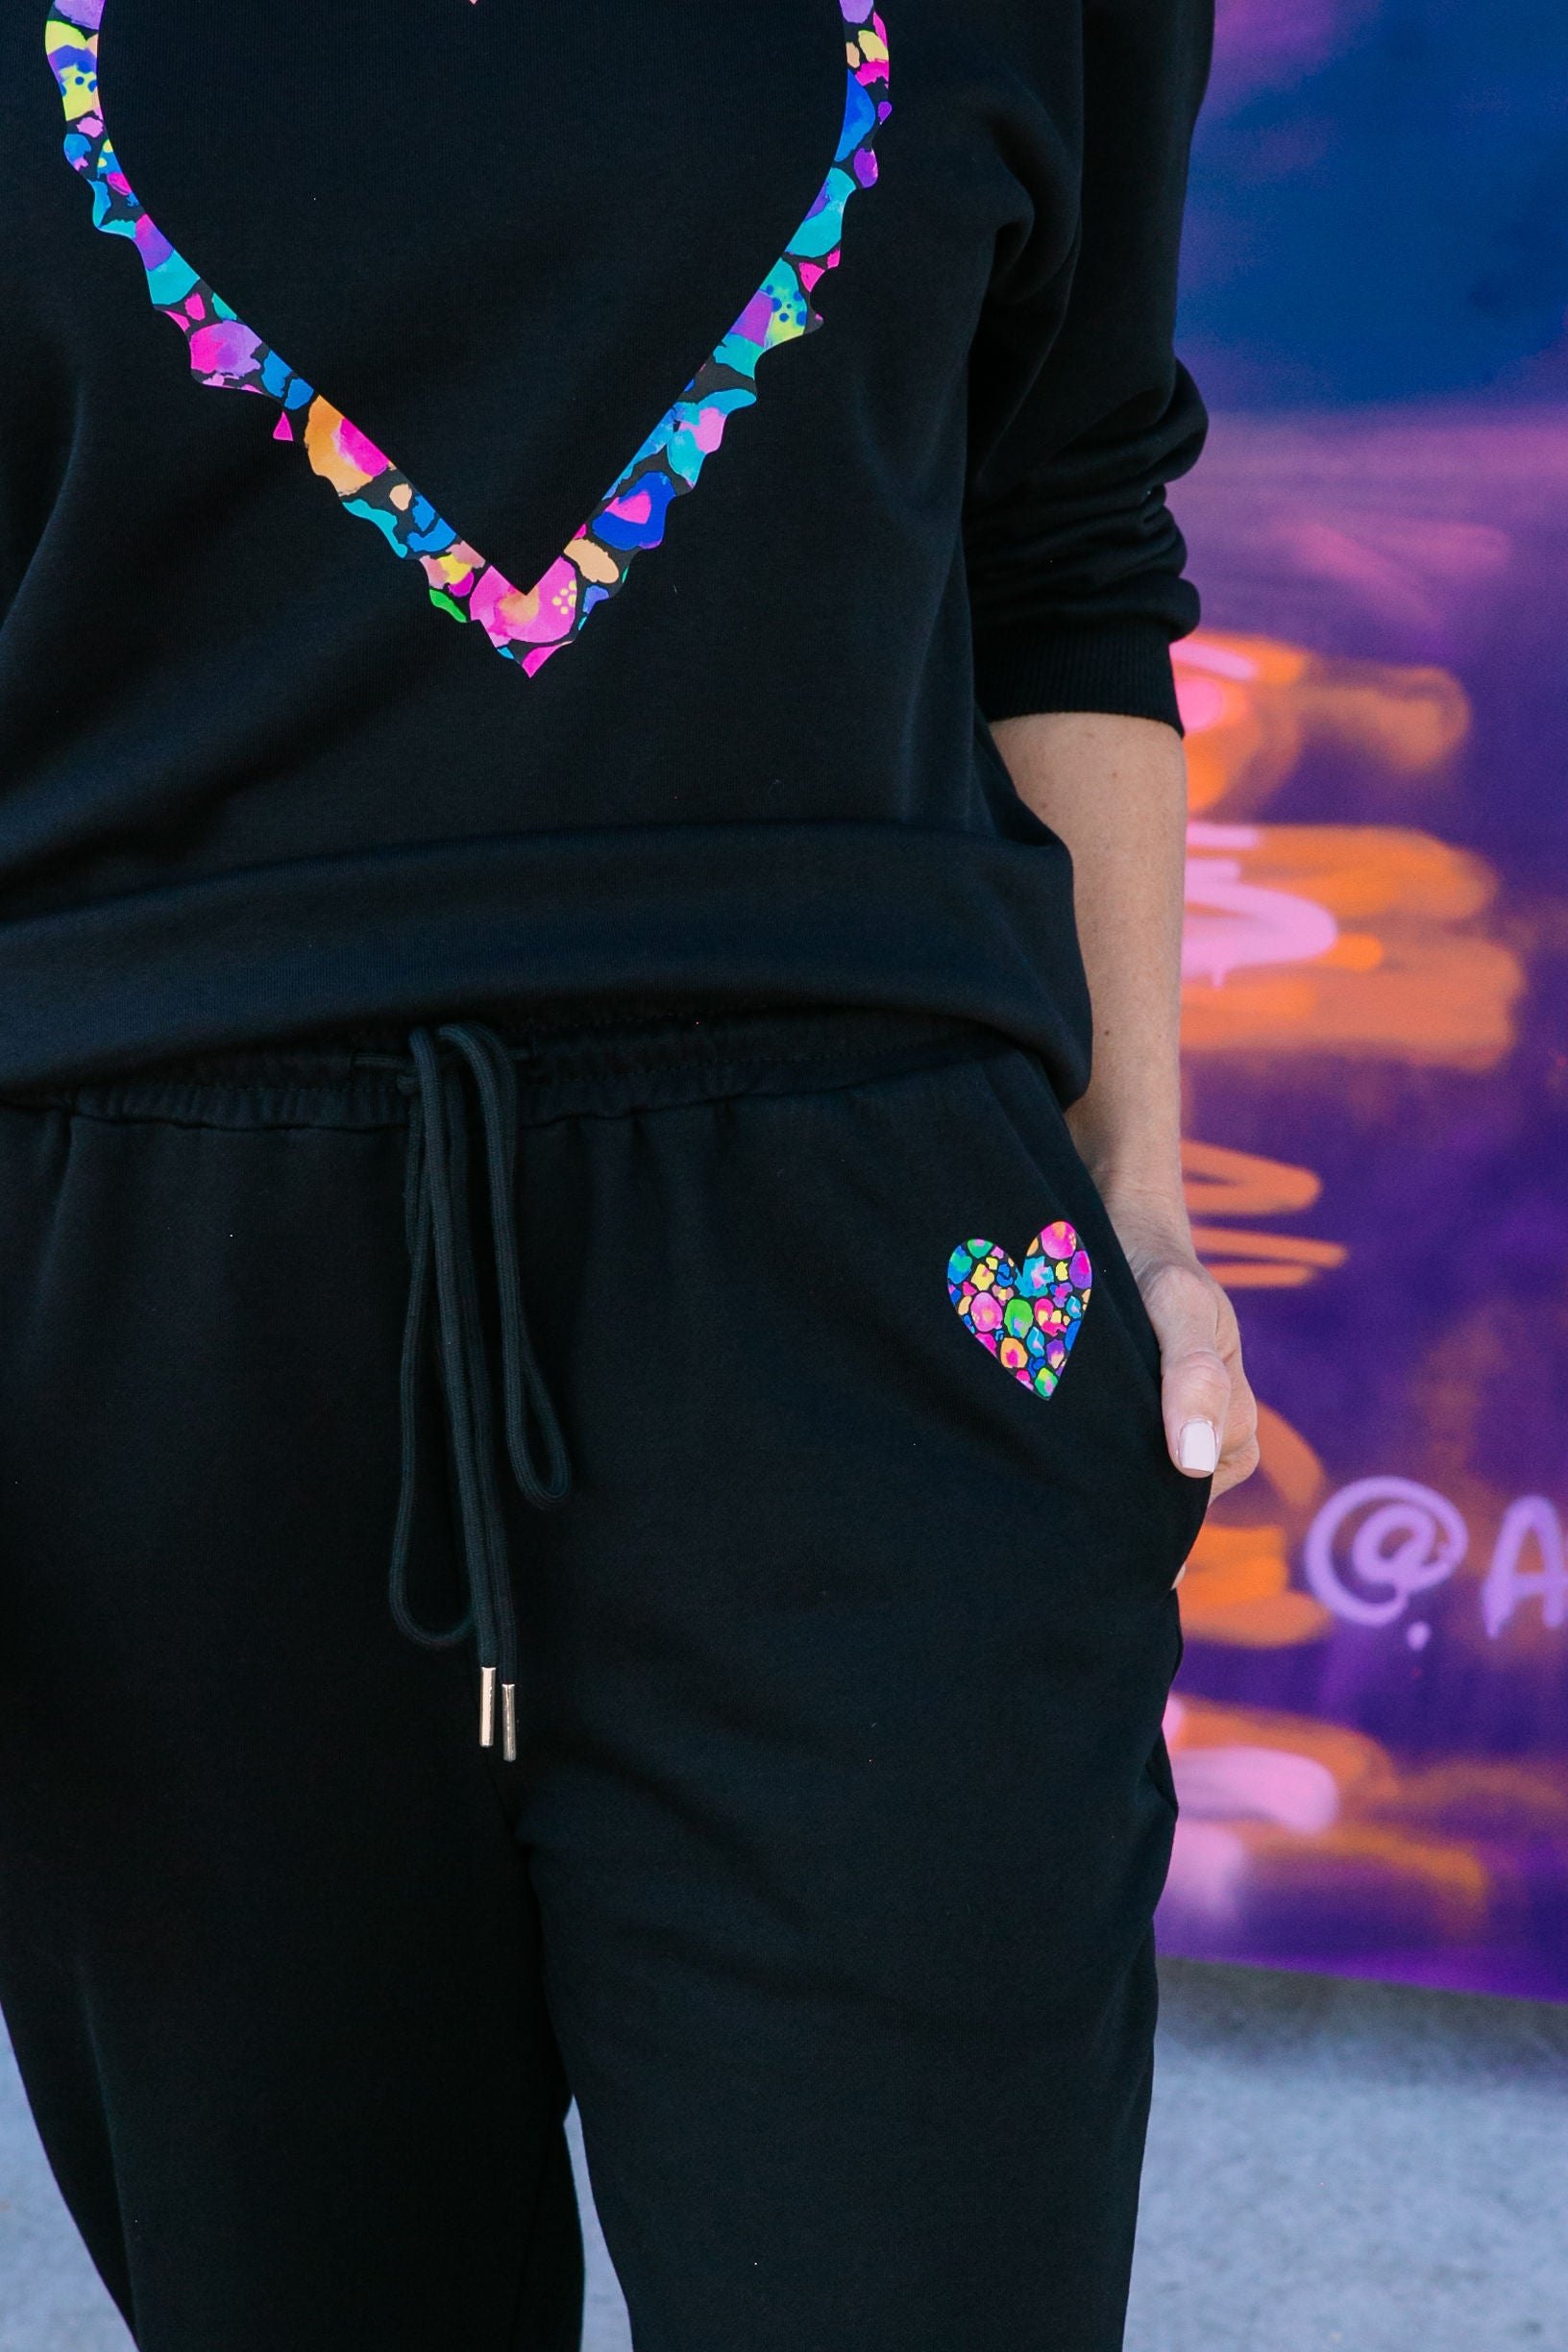 Adore Rainbow Heart Sweater by Kasey Rainbow